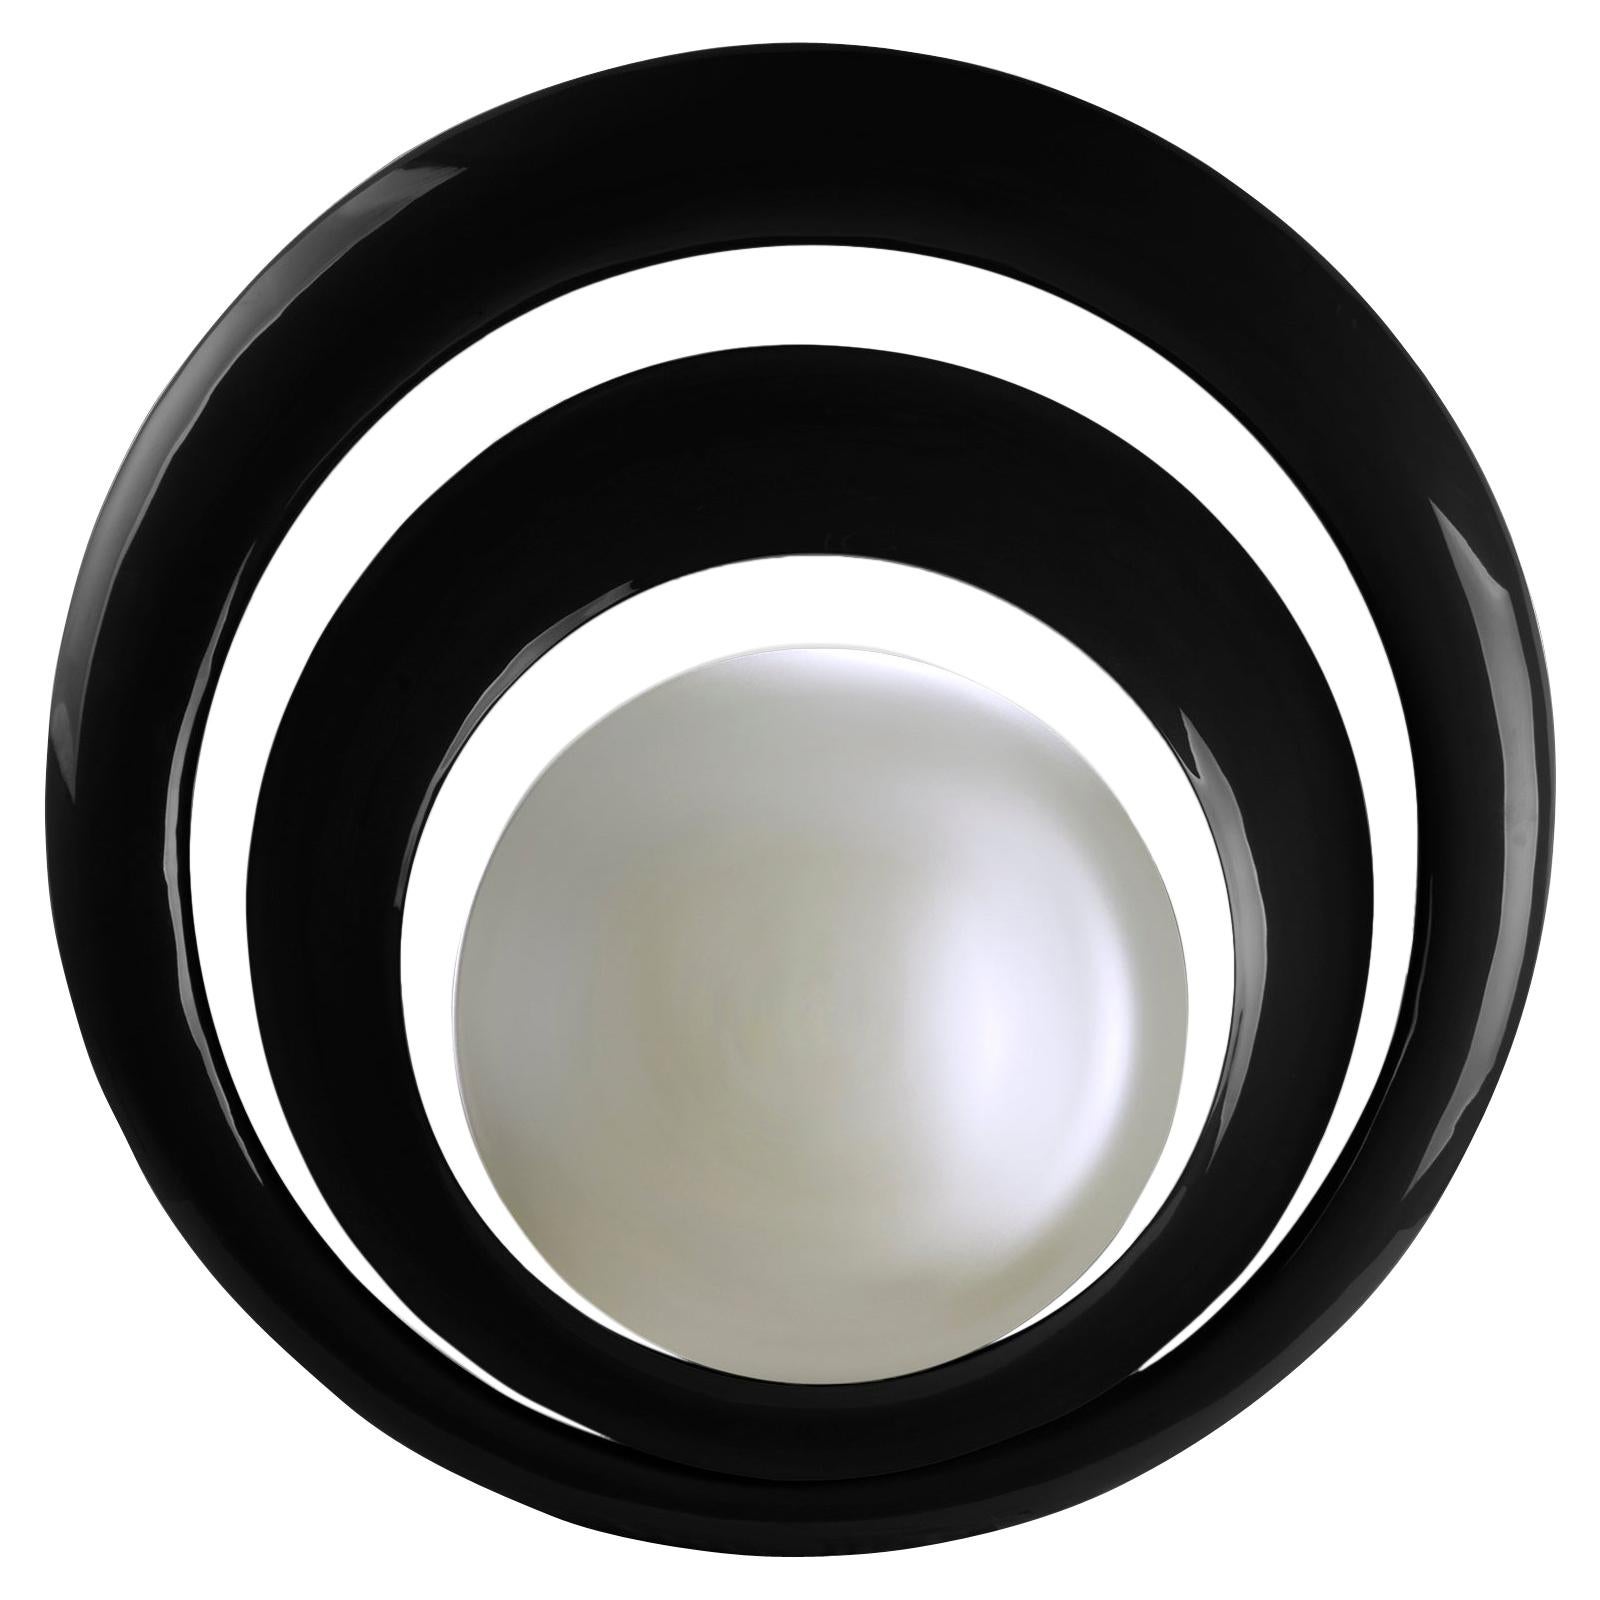 Serail Round Mirror in Black Lacquered Finish For Sale